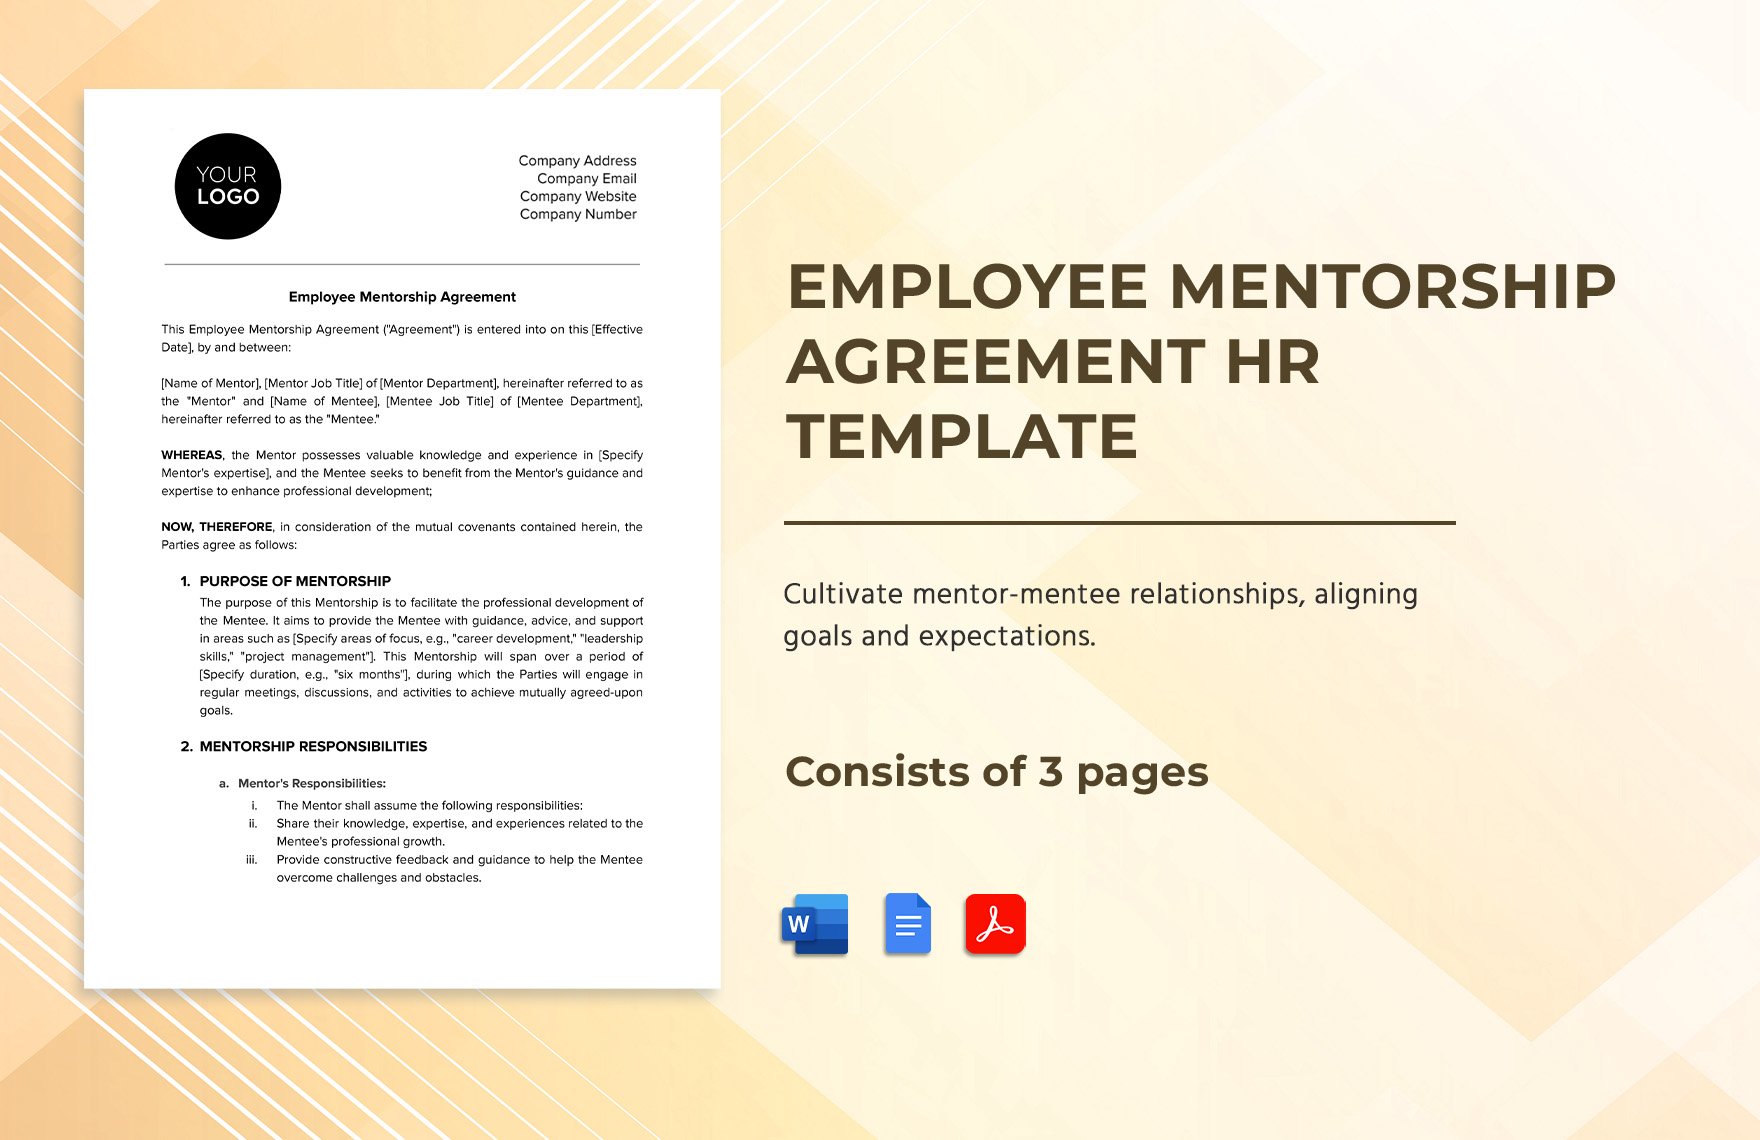 Employee Mentorship Agreement HR Template in Word, Google Docs, PDF